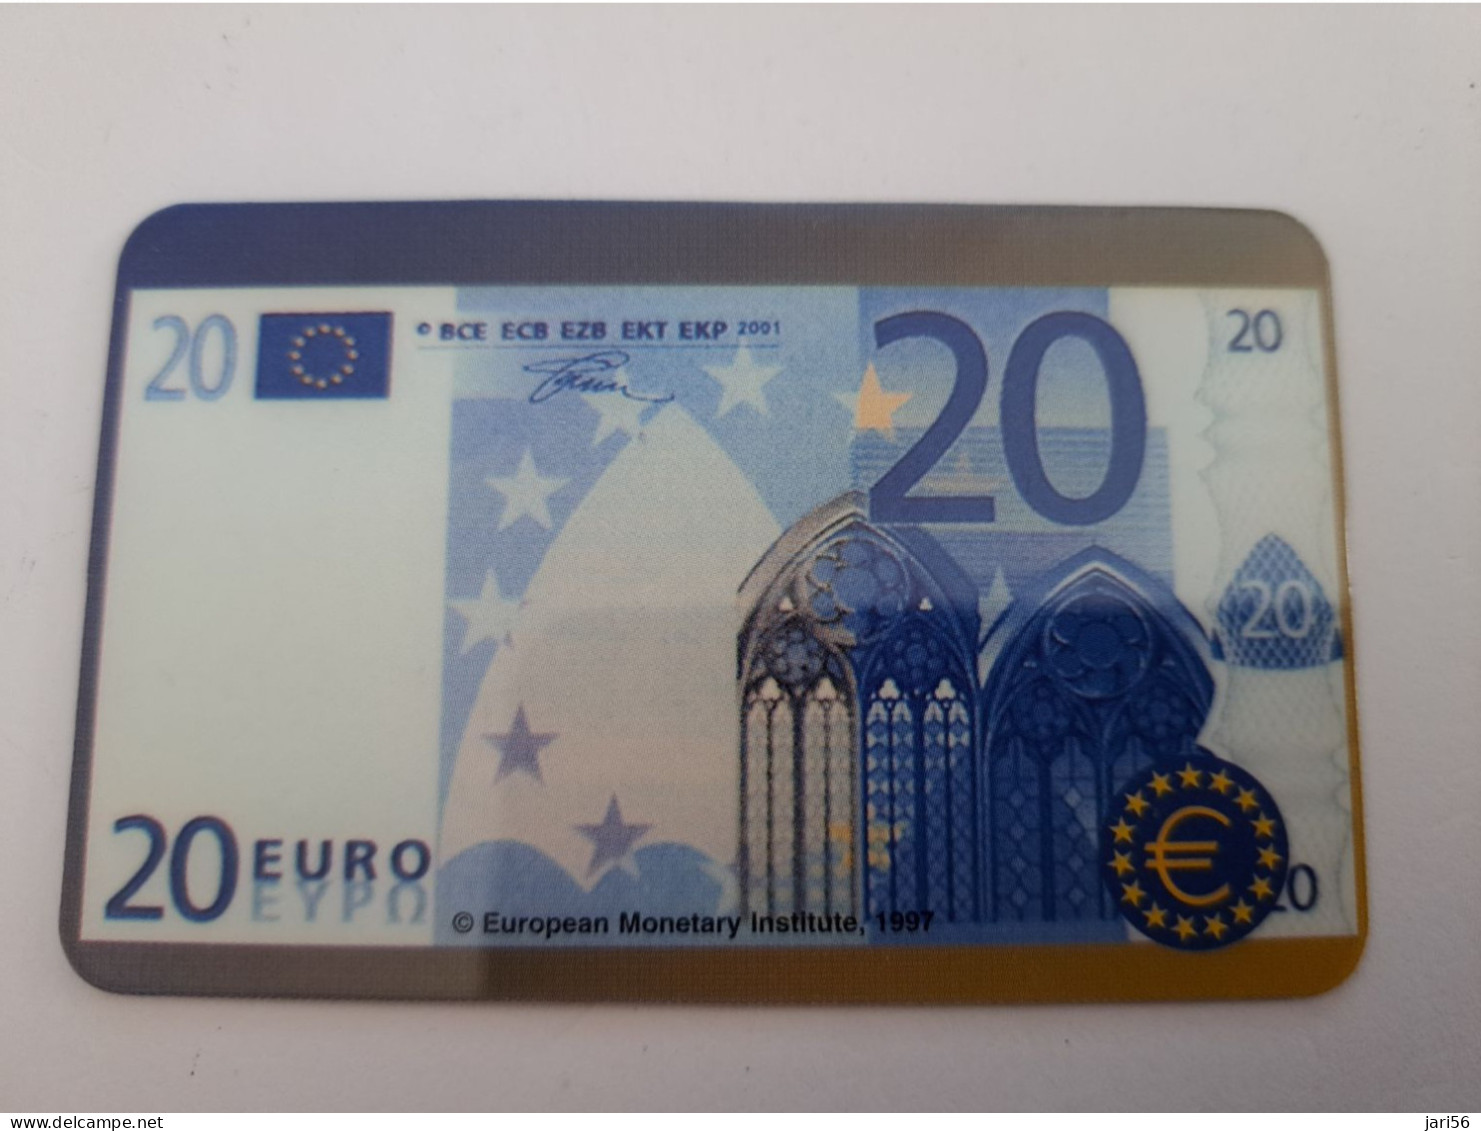 GREAT BRITAIN   20 UNITS   / EURO COINS/ BILJET 20  EURO    (date NOVEMBER 1998)  PREPAID CARD / MINT      **14832** - [10] Colecciones